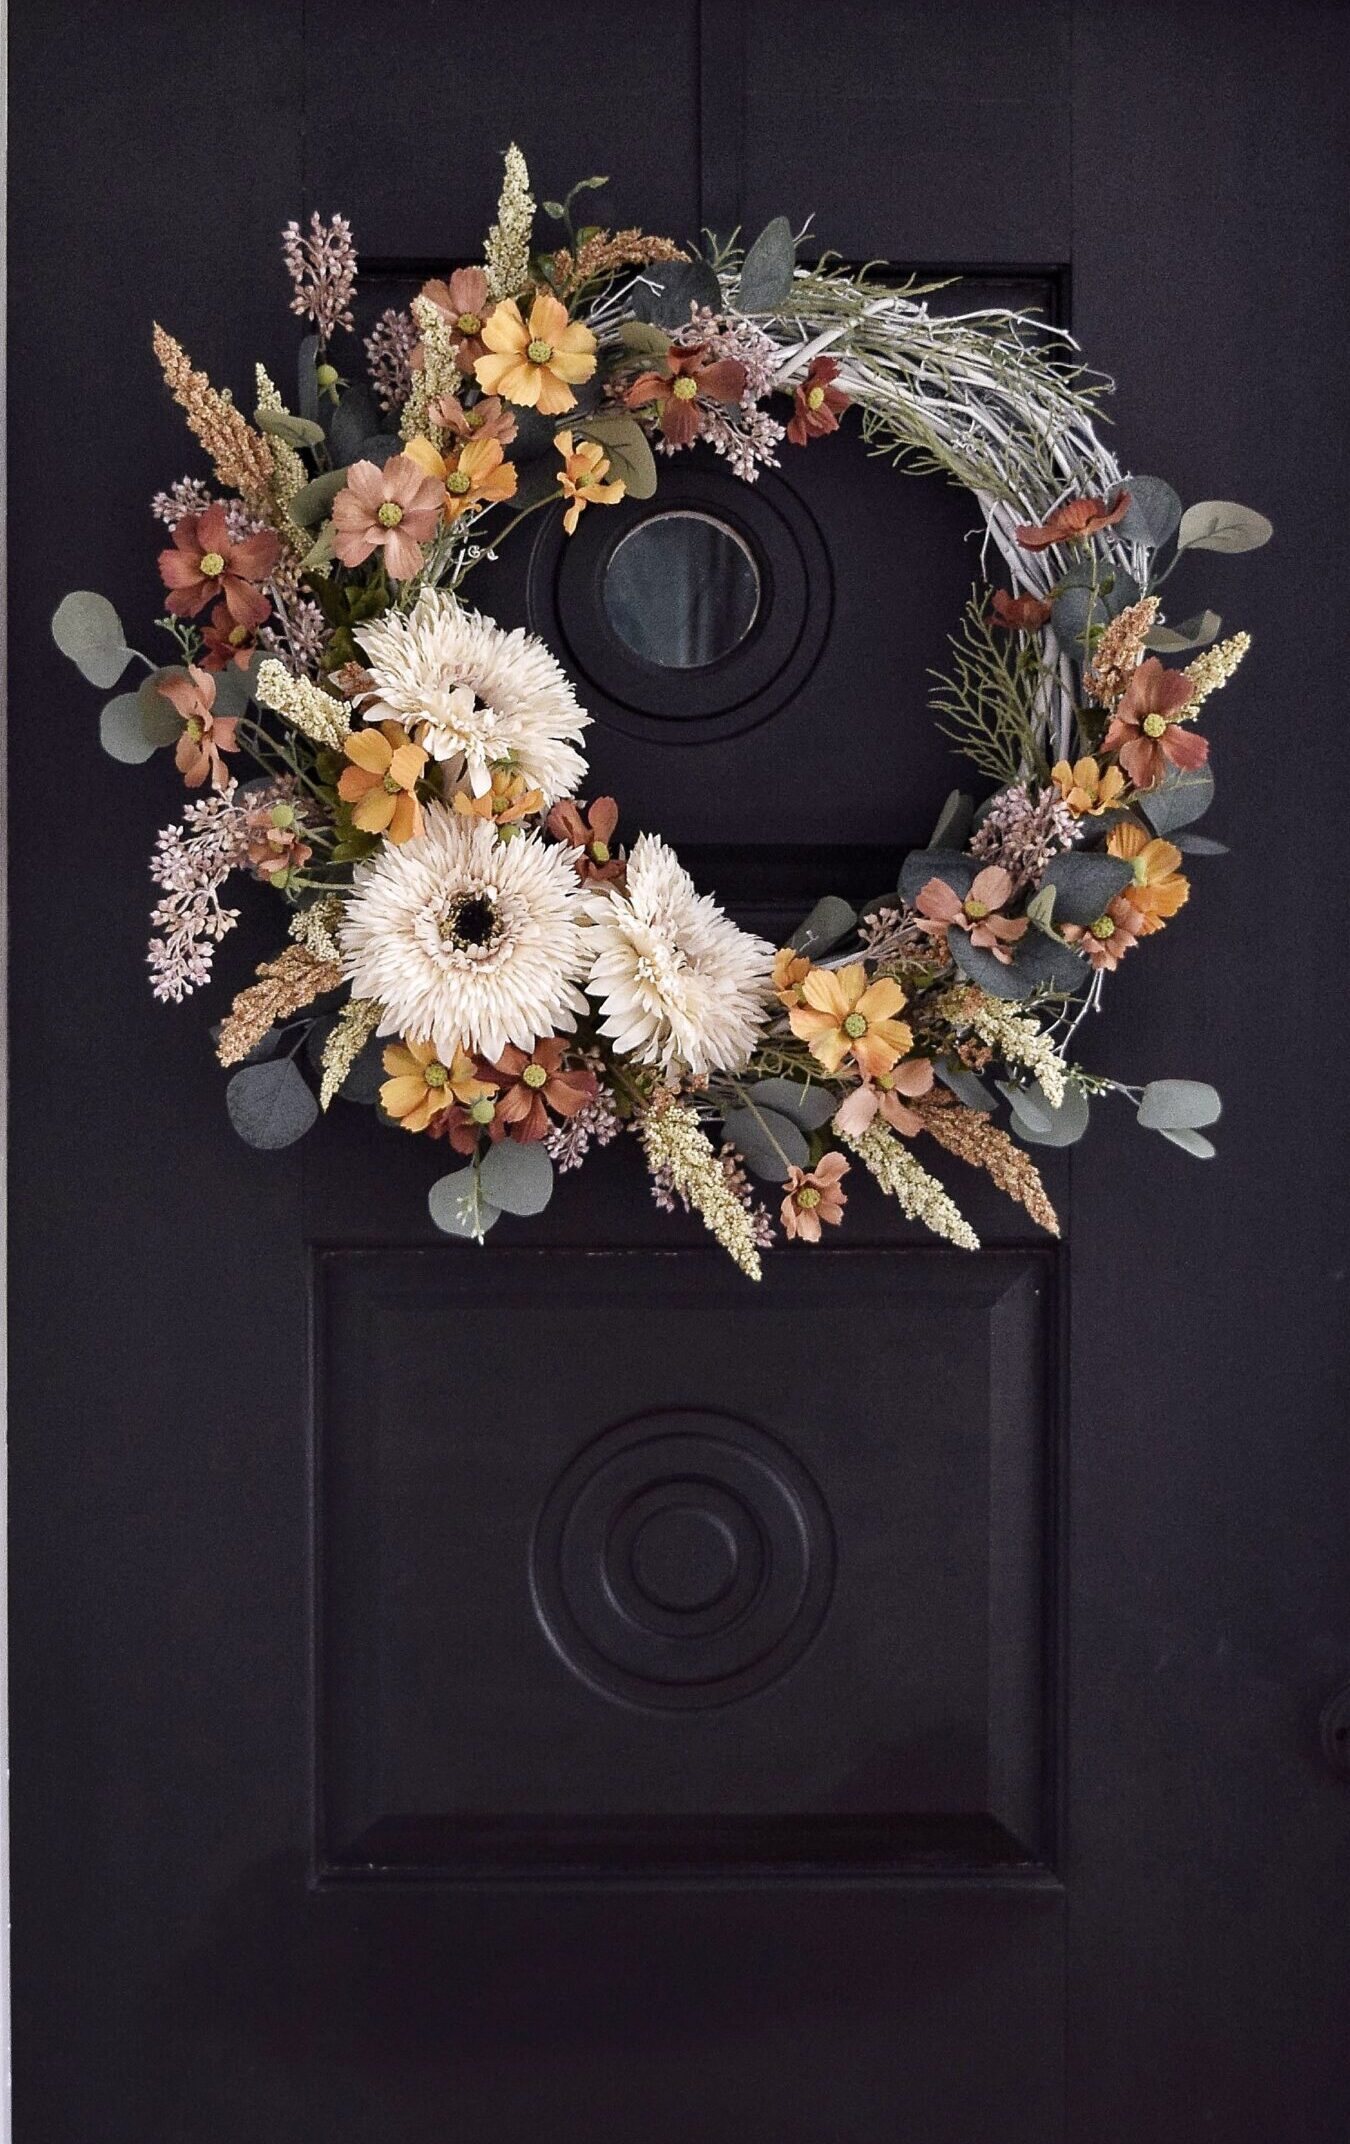 Wreathmaking 101: Handmade Fall Wildflower Wreath